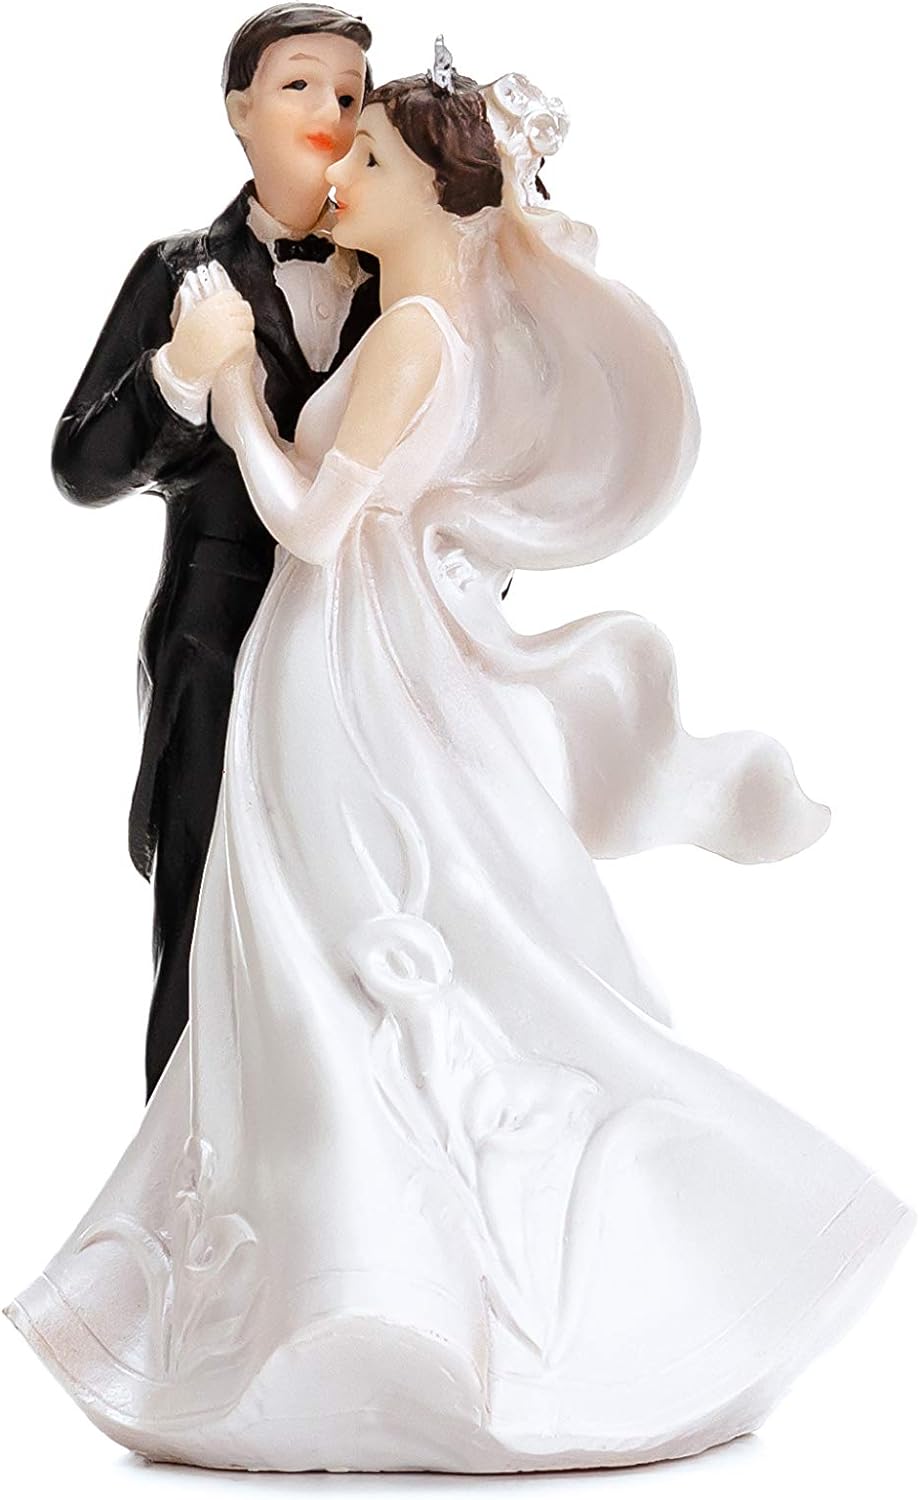 Wedding Cake Figure Bride and Groom dancing